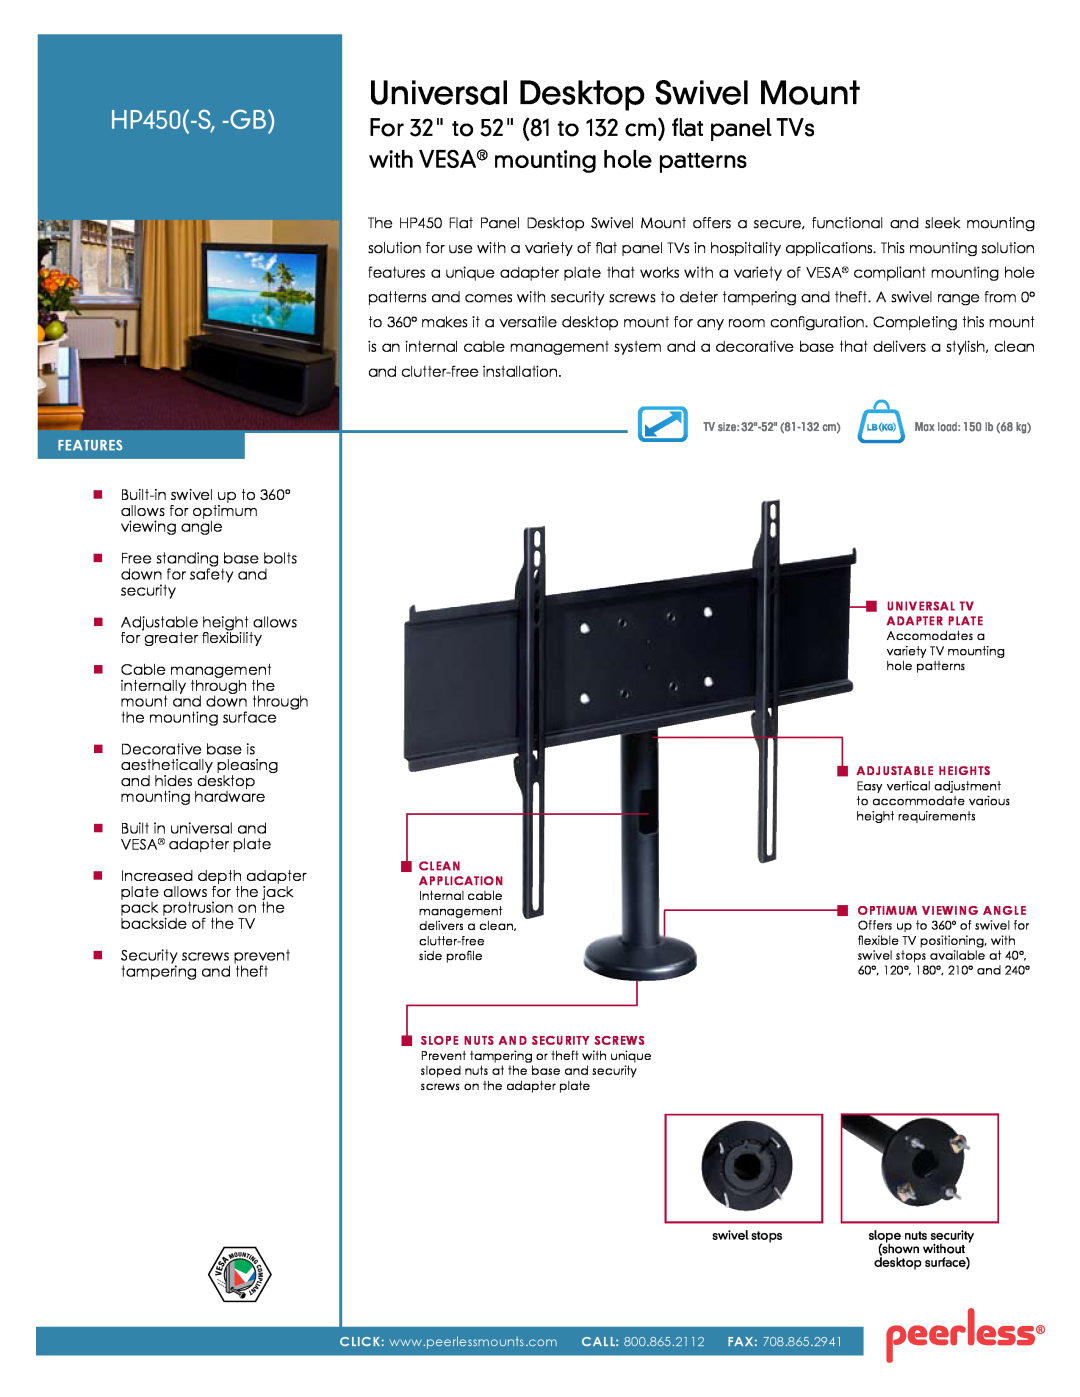 Peerless Industries manual Universal Desktop Swivel Mount, HP450-S, -GB, For 32 to 52 81 to 132 cm flat panel TVs 